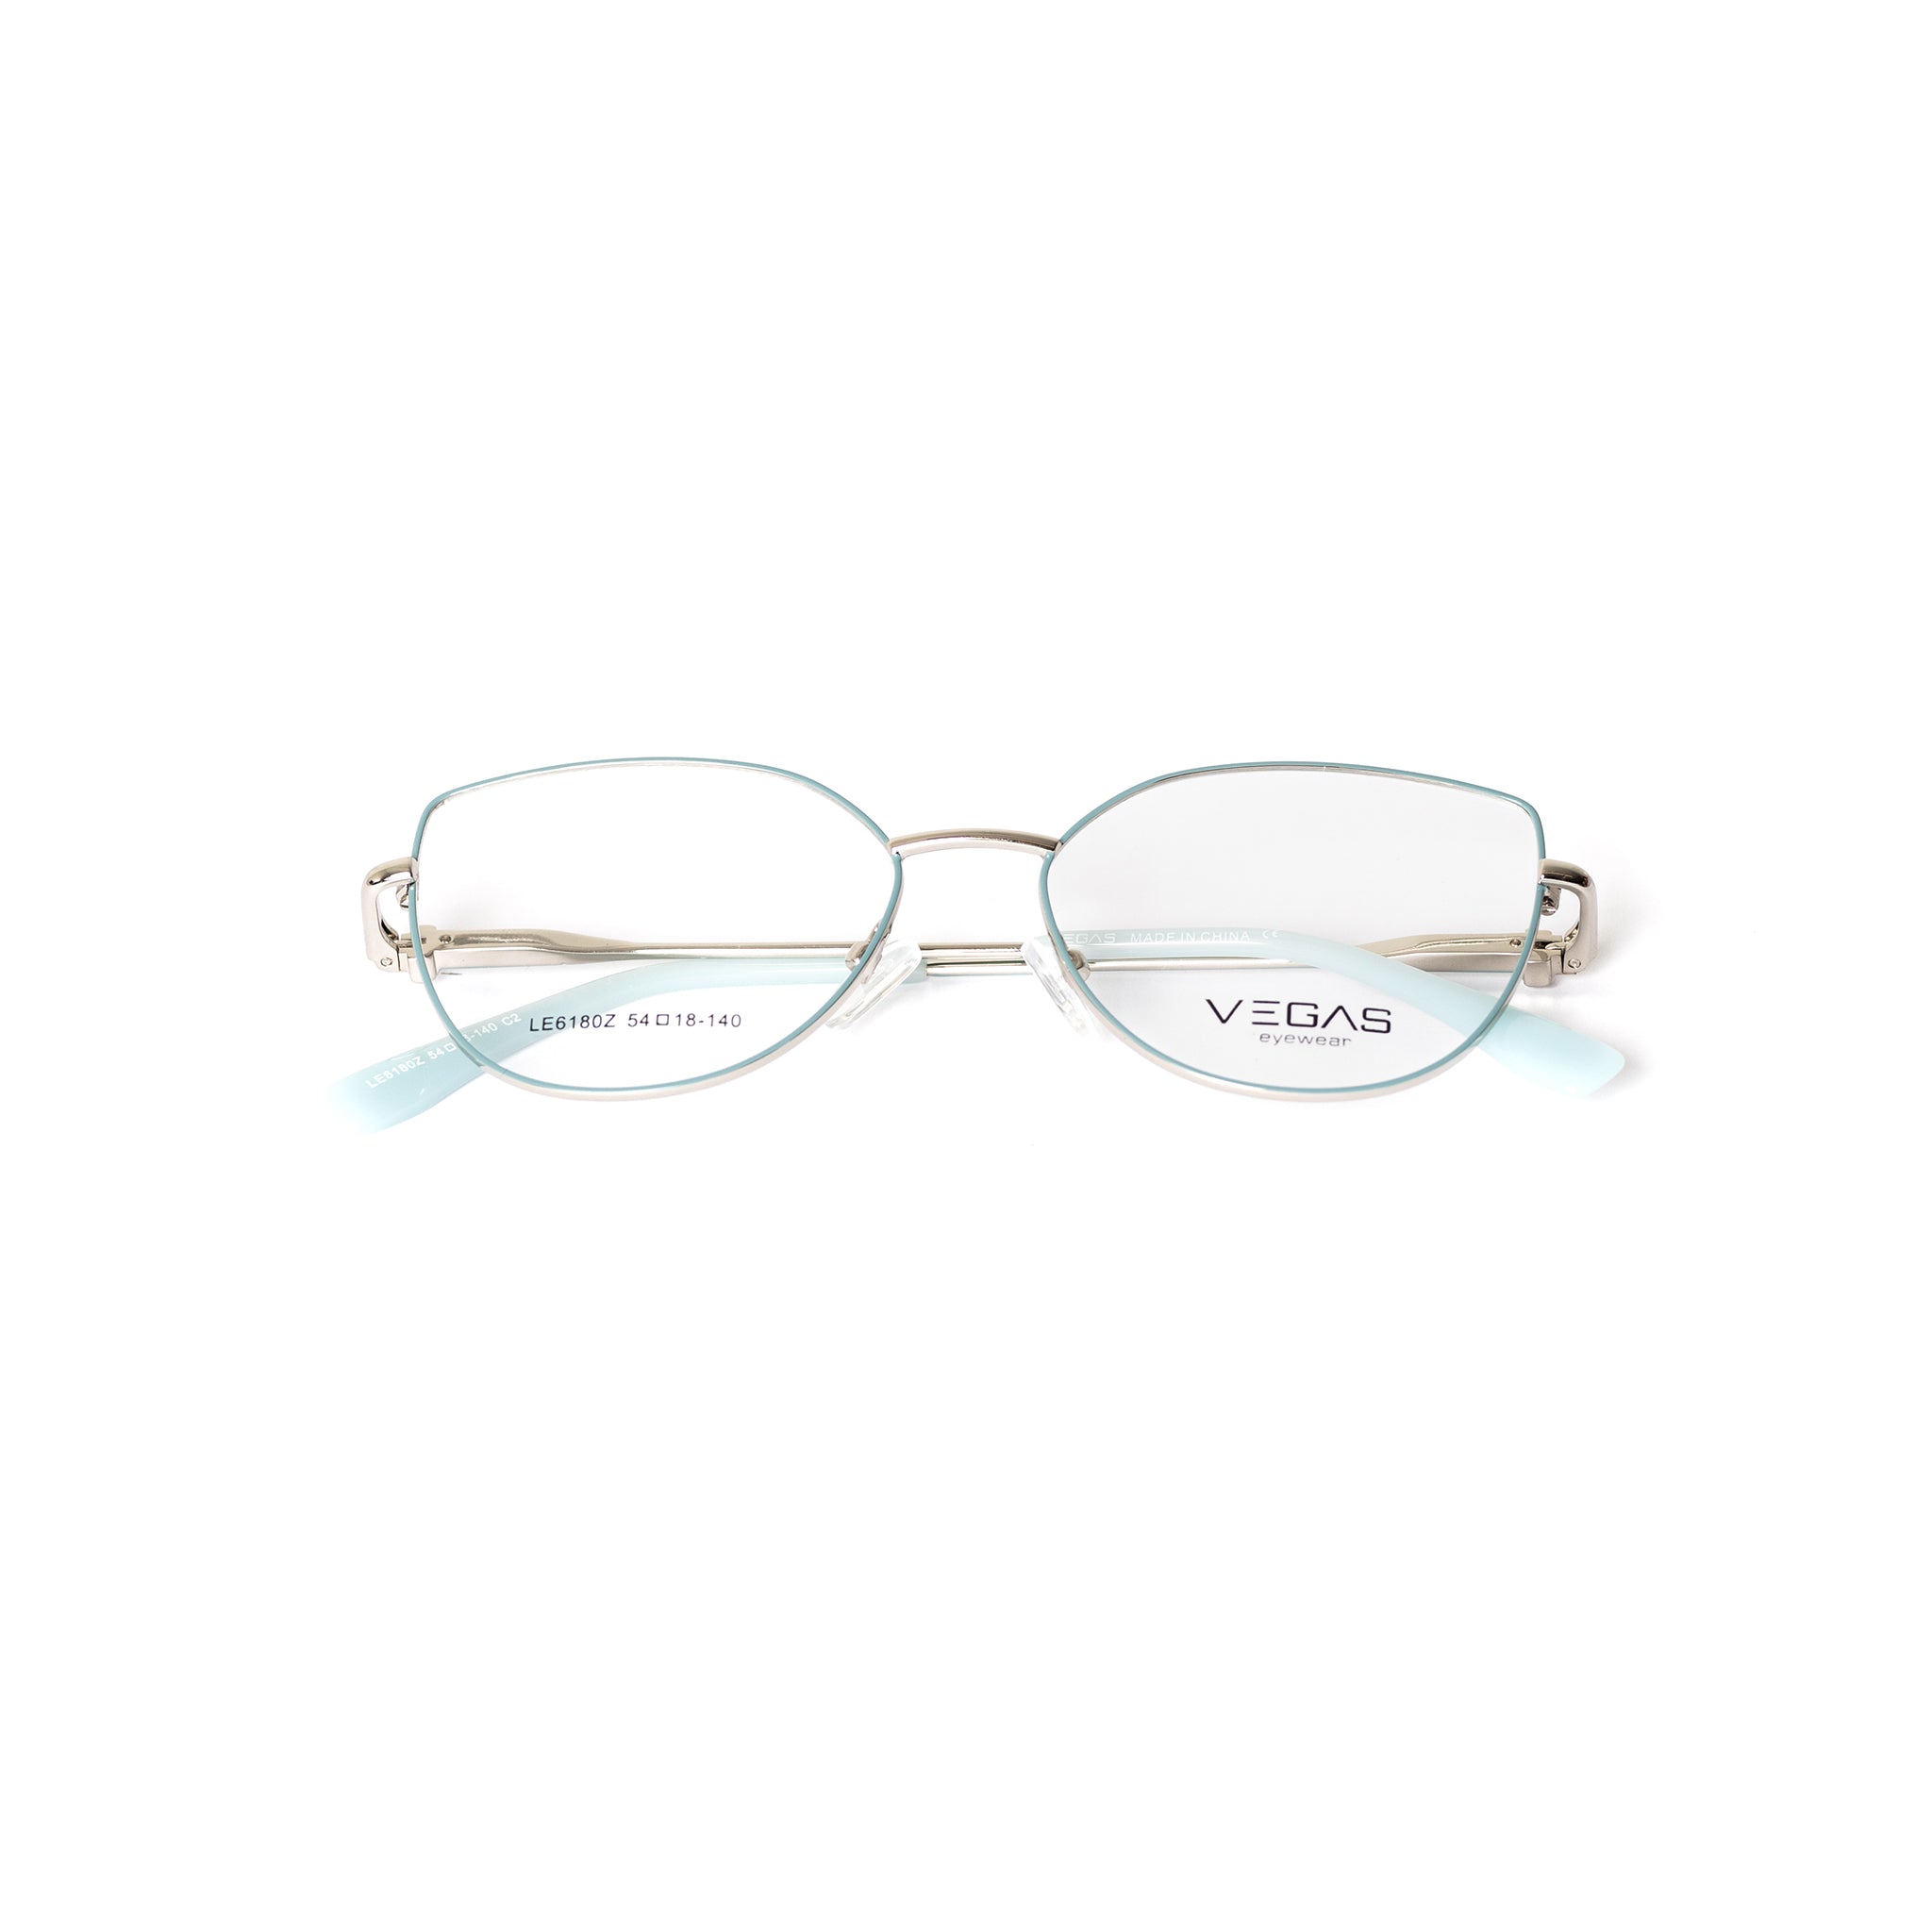 VEGAS LE6180Z - COC Eyewear